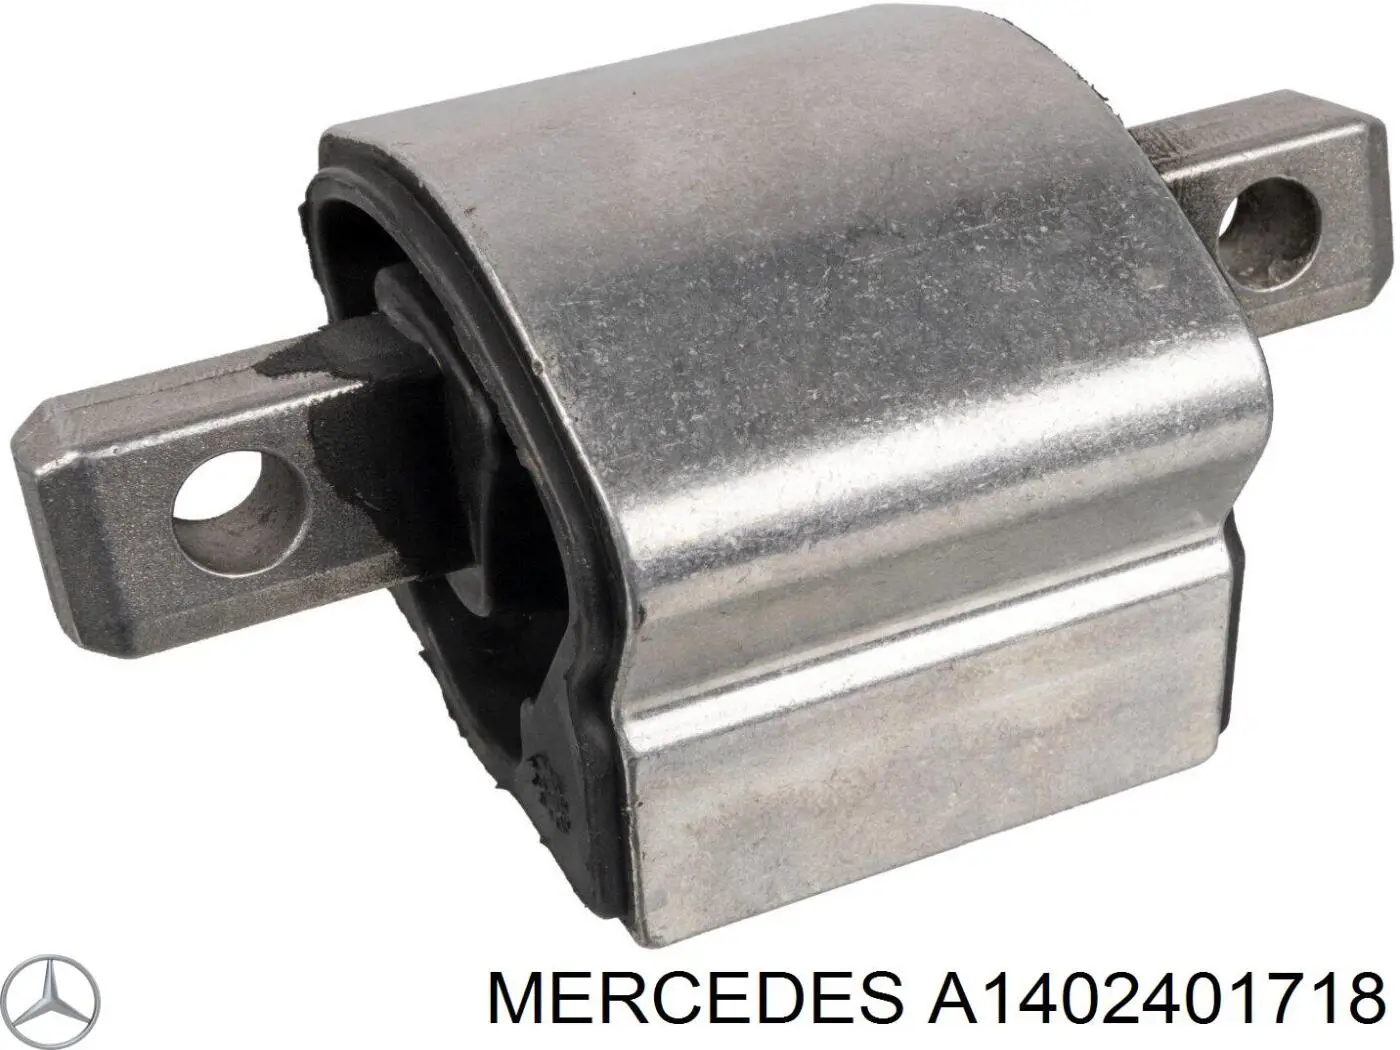 A1402401718 Mercedes подушка трансмиссии (опора коробки передач)